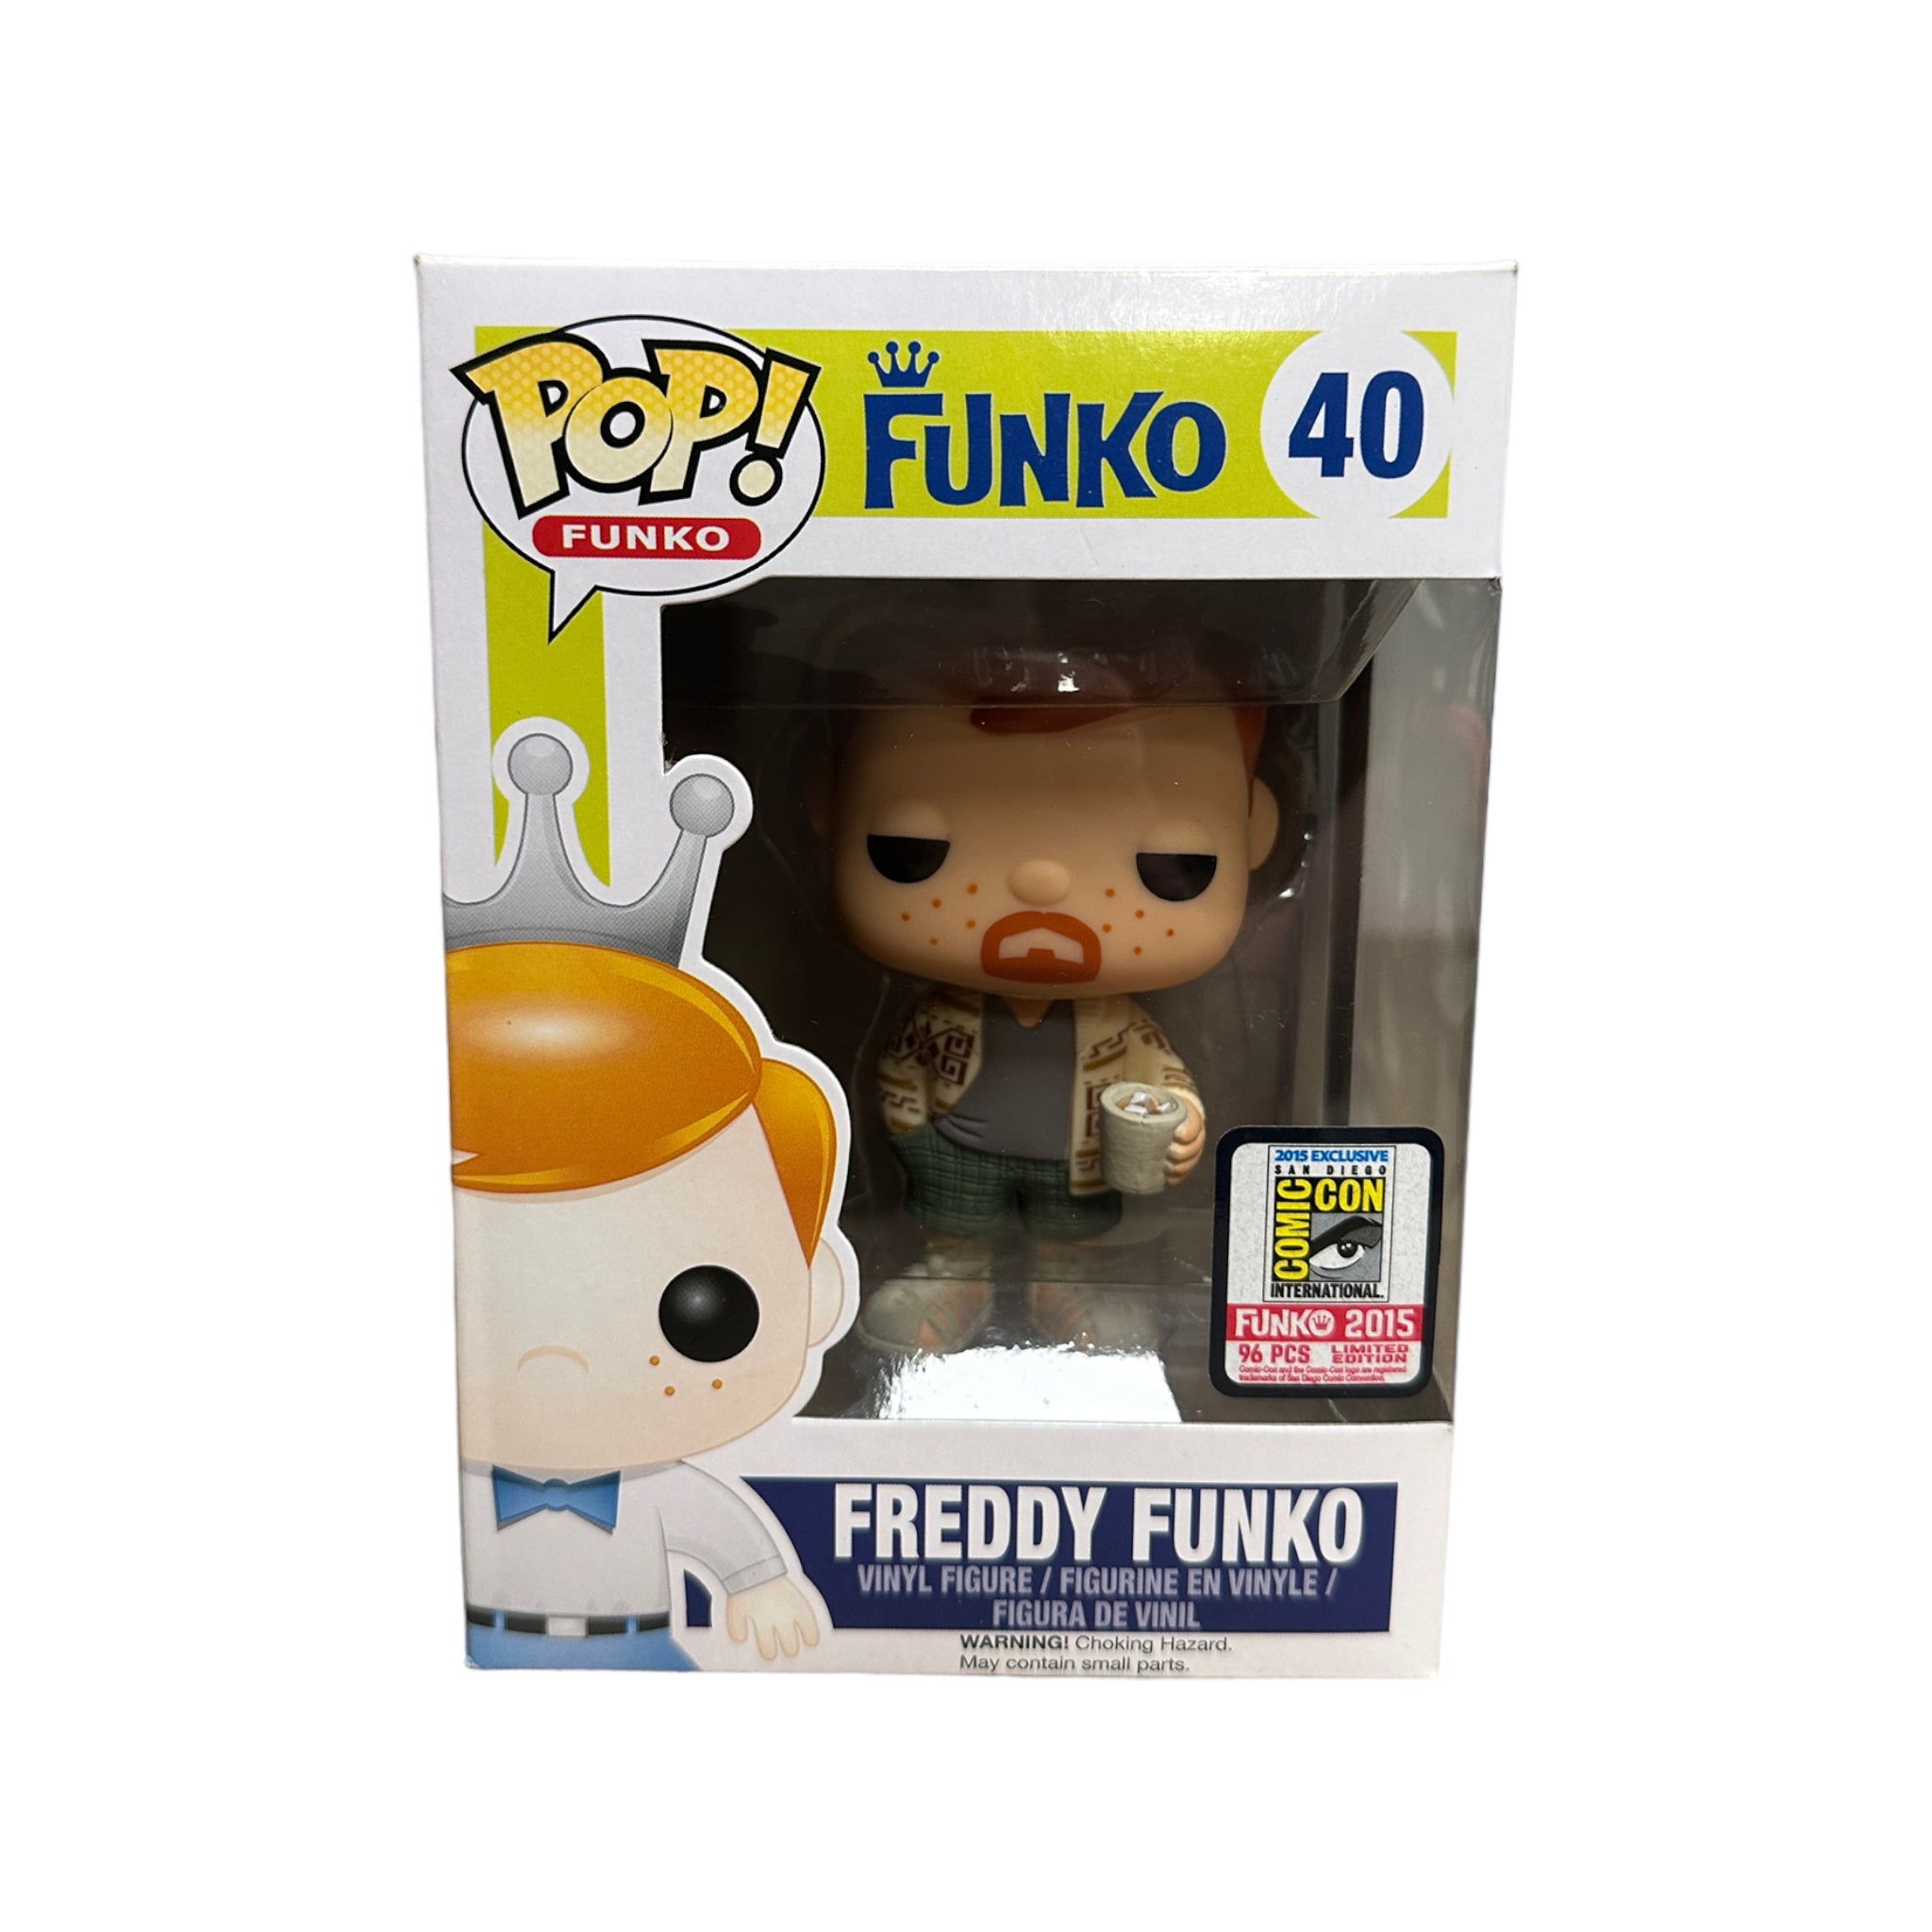 Freddy Funko as The Dude #40 Funko Pop! - SDCC 2015 Exclusive LE96 Pcs - Condition 8/10